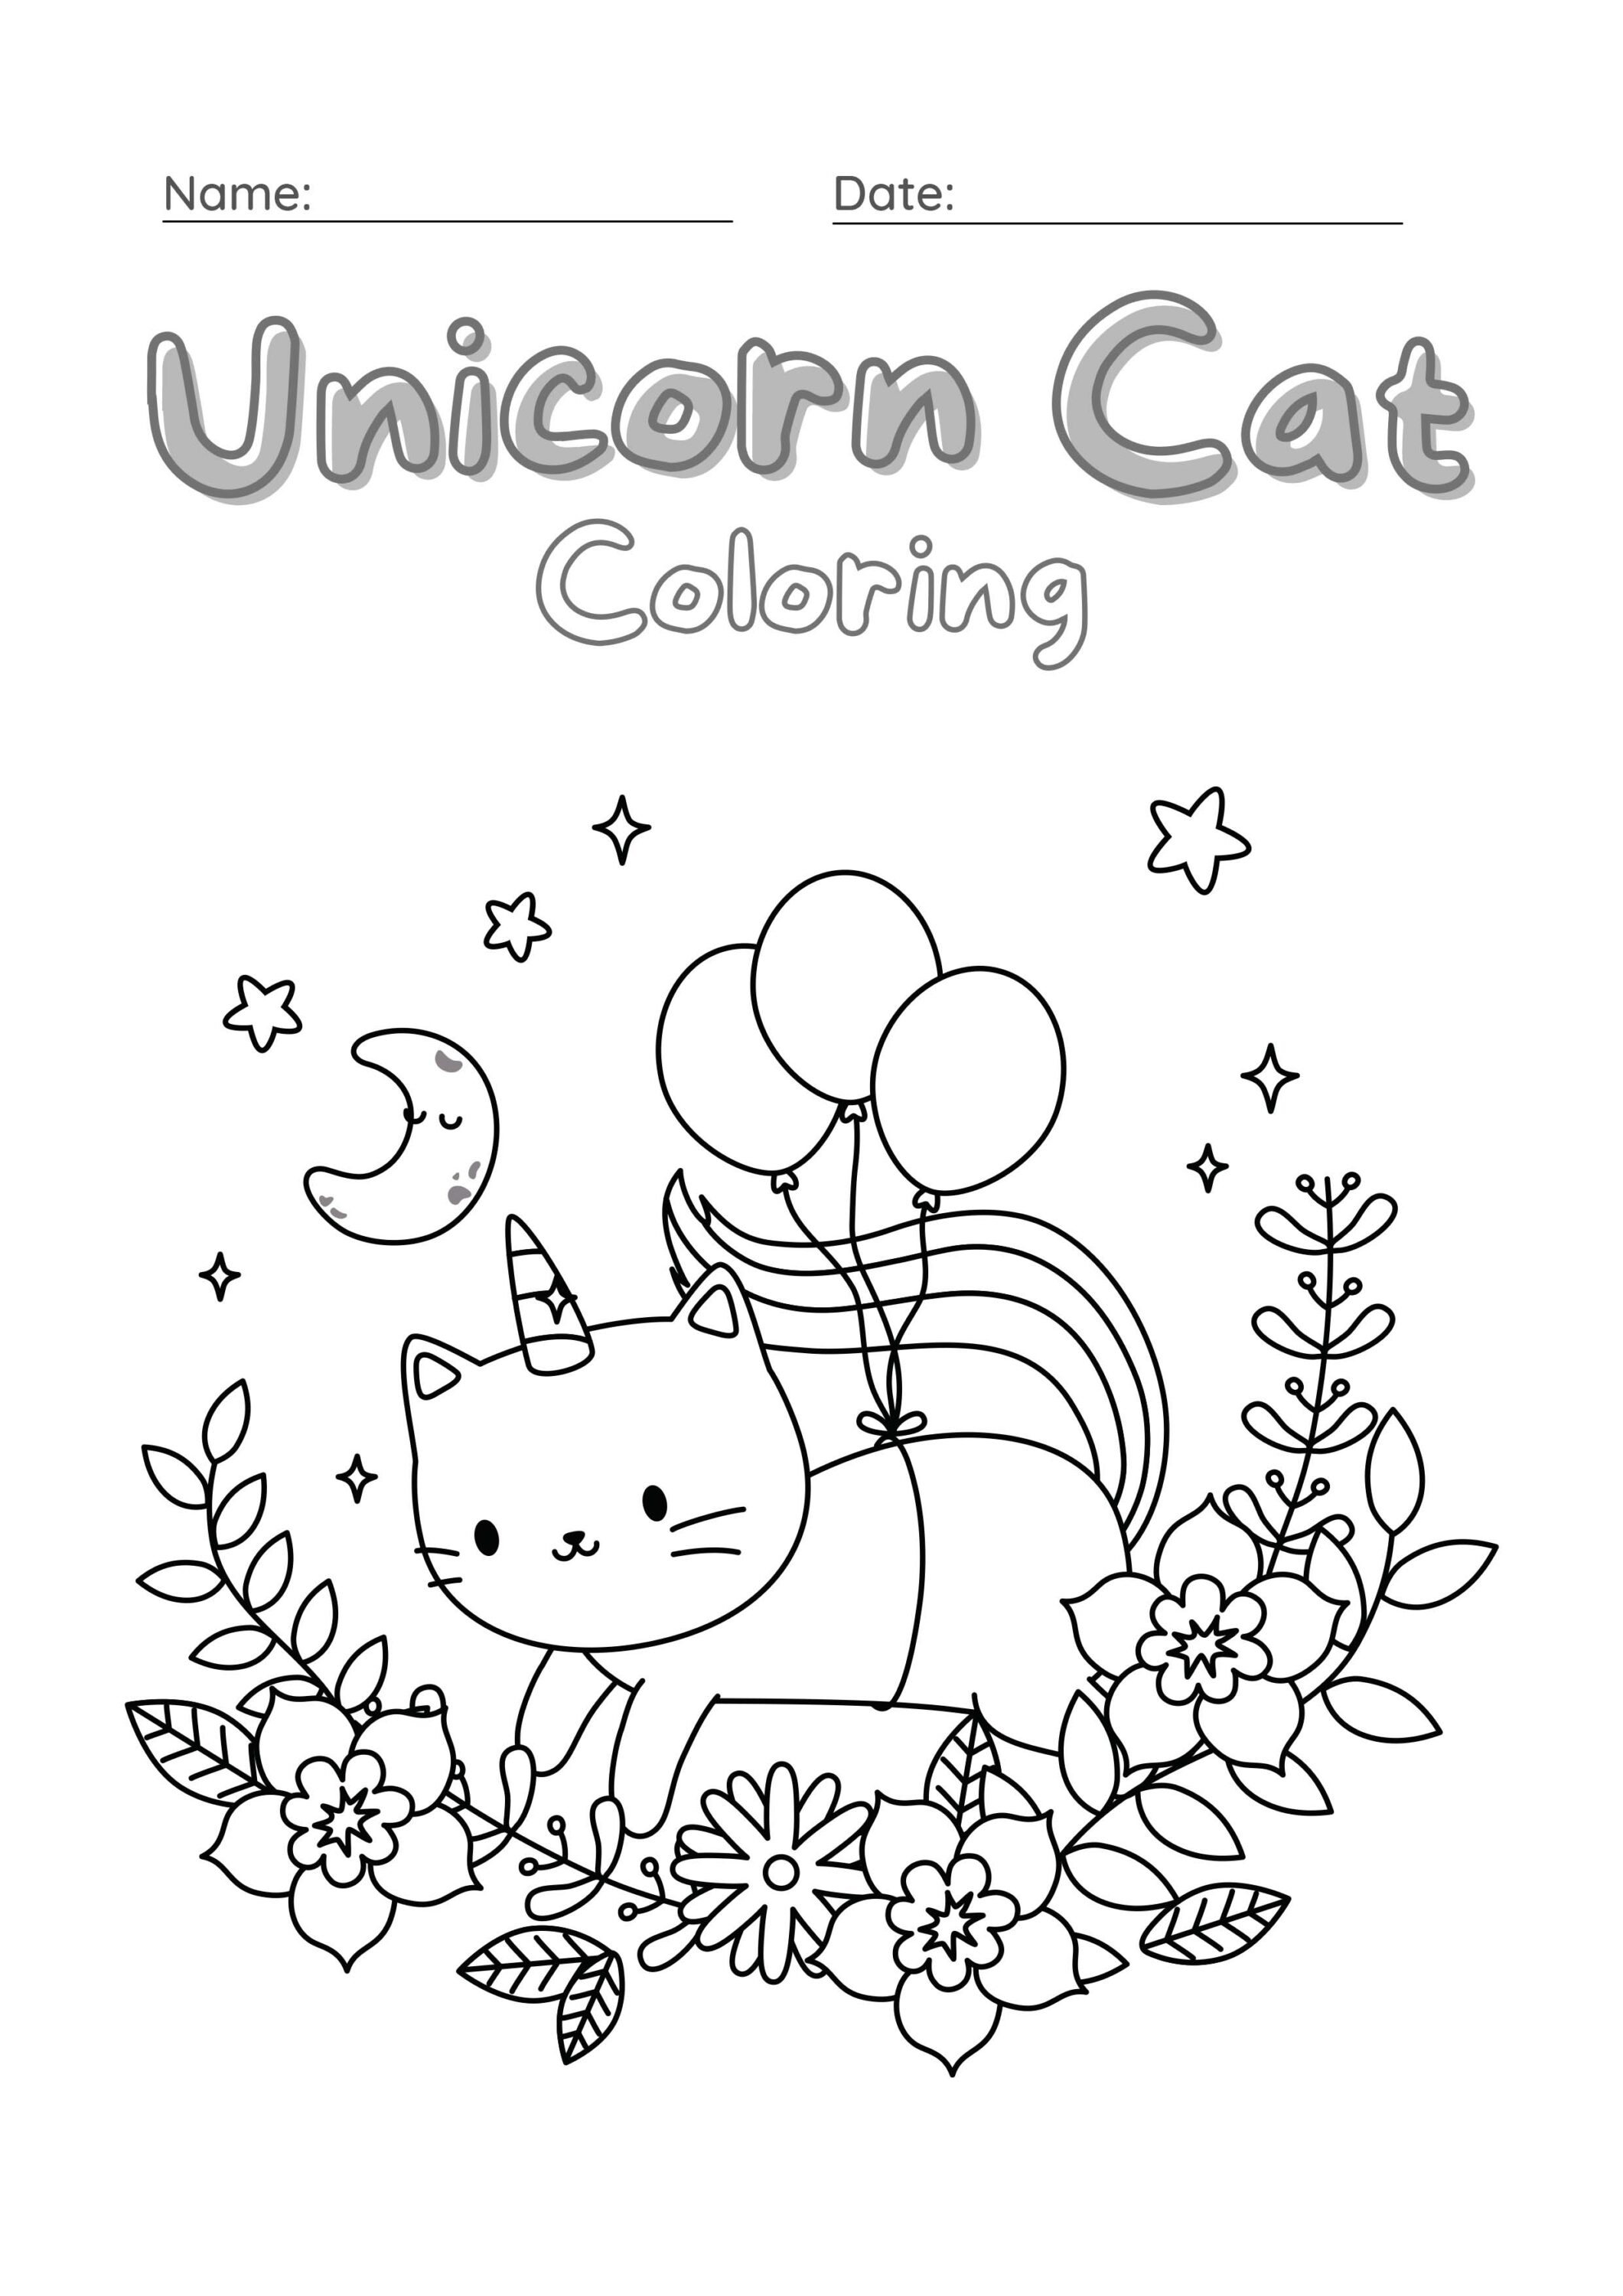 Unicorn Cat Coloring Worksheet Set 1